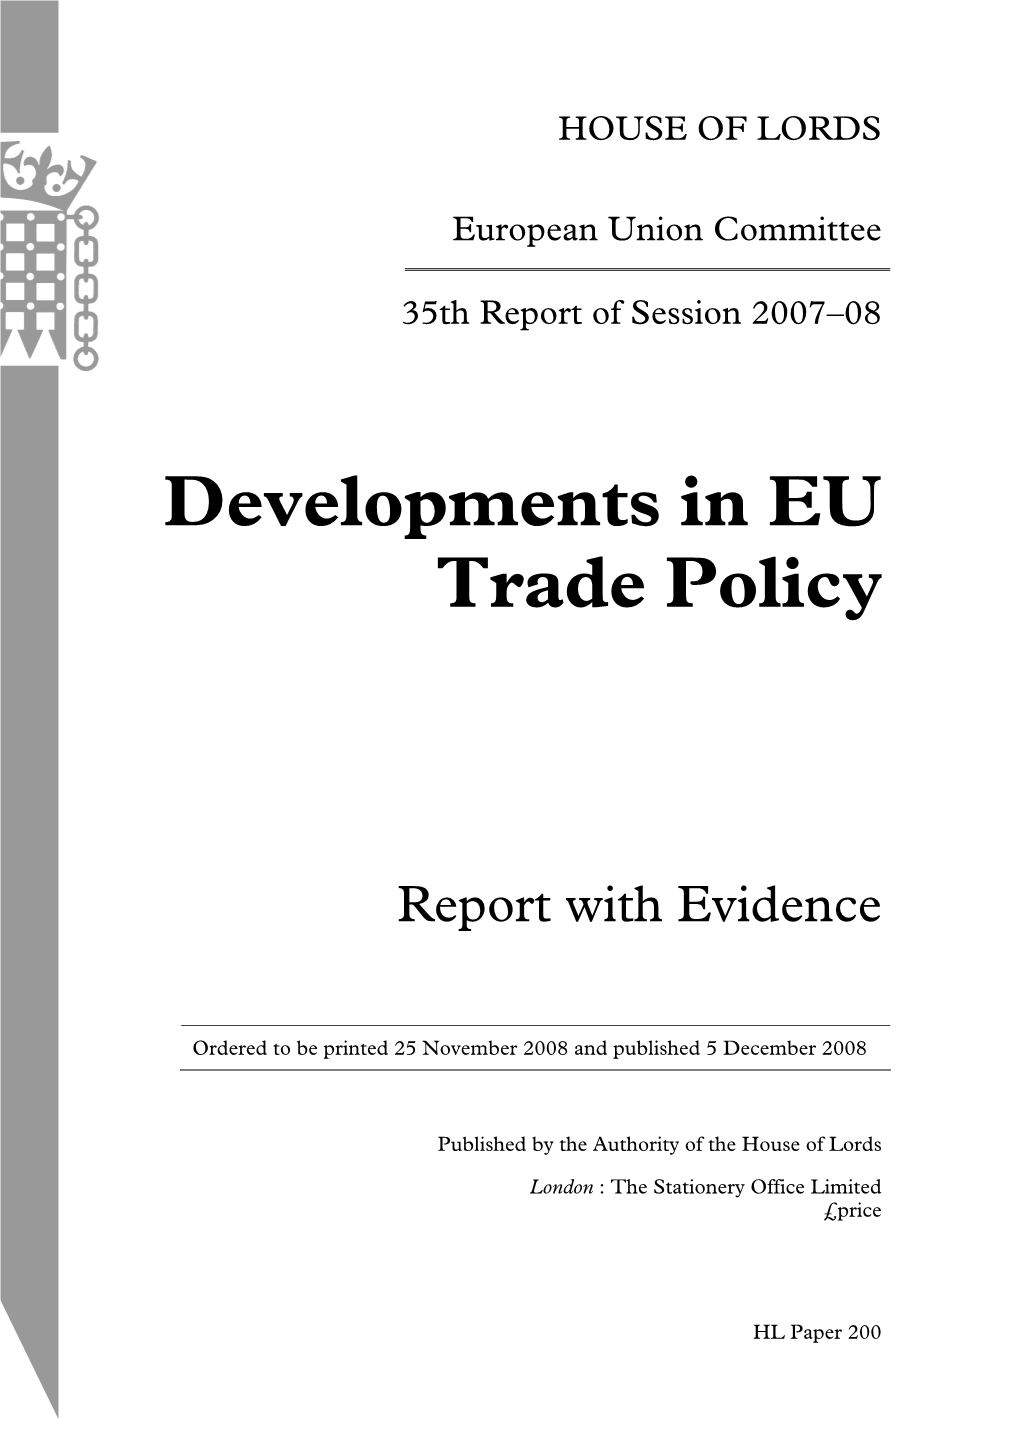 Developments in EU Trade Policy